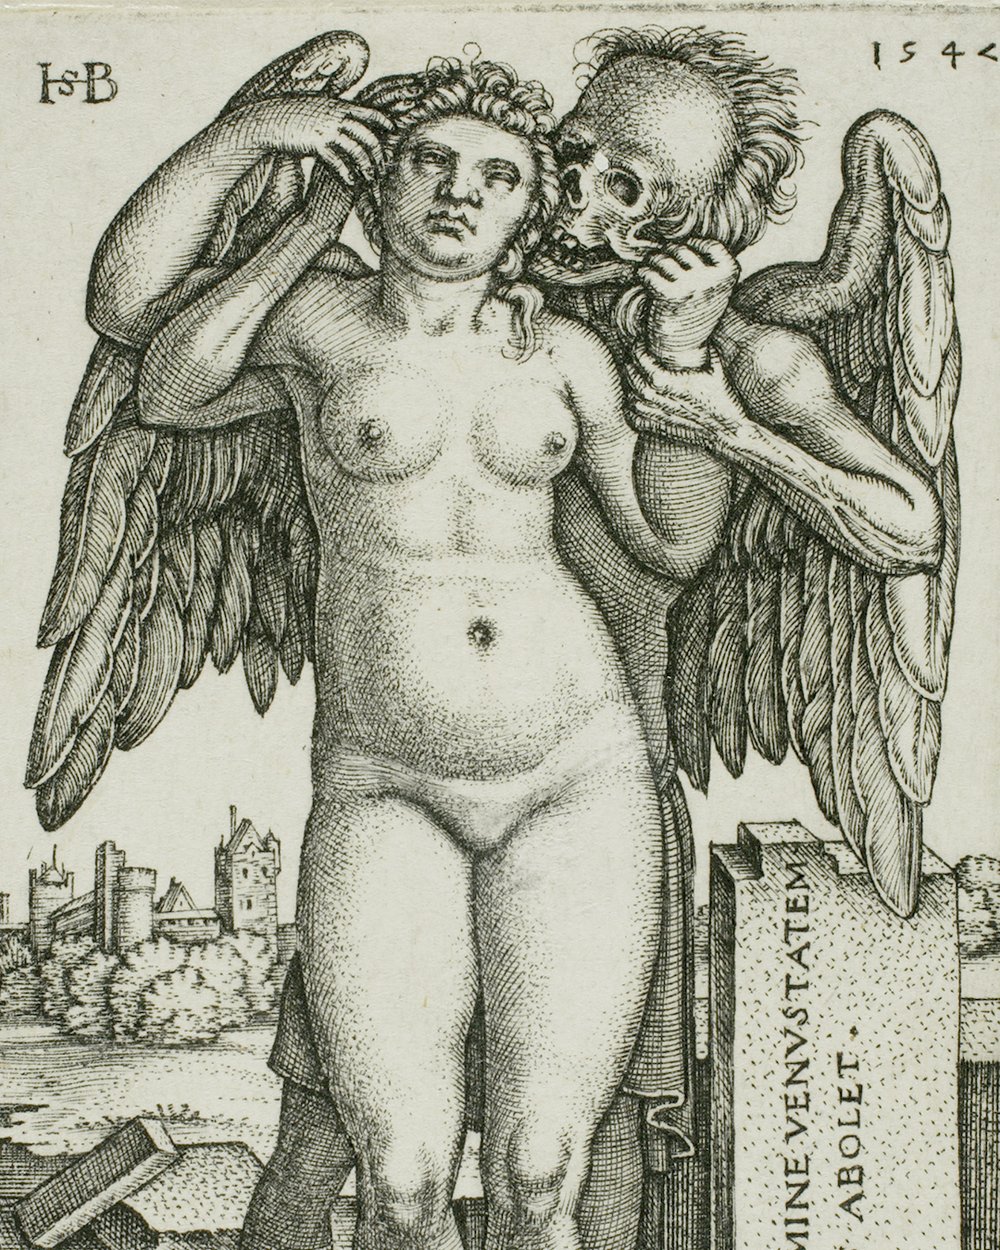 Sebald Beham (1546)